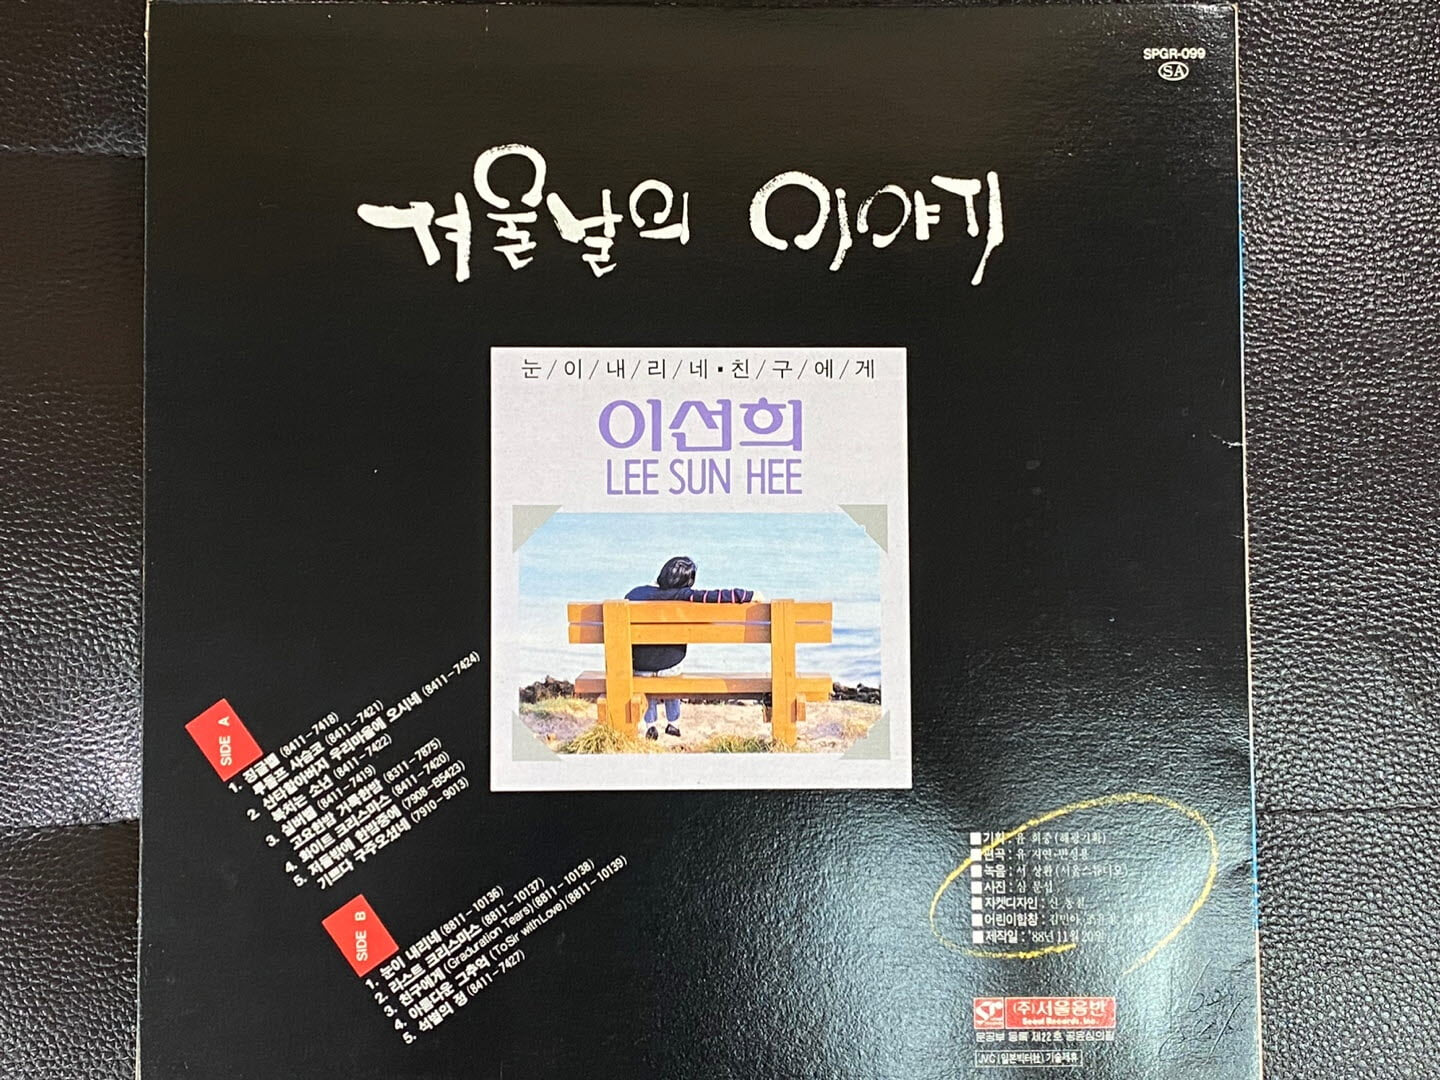 [LP] 이선희 - 겨울날의 이야기 LP [서울음반 SPGR-099]